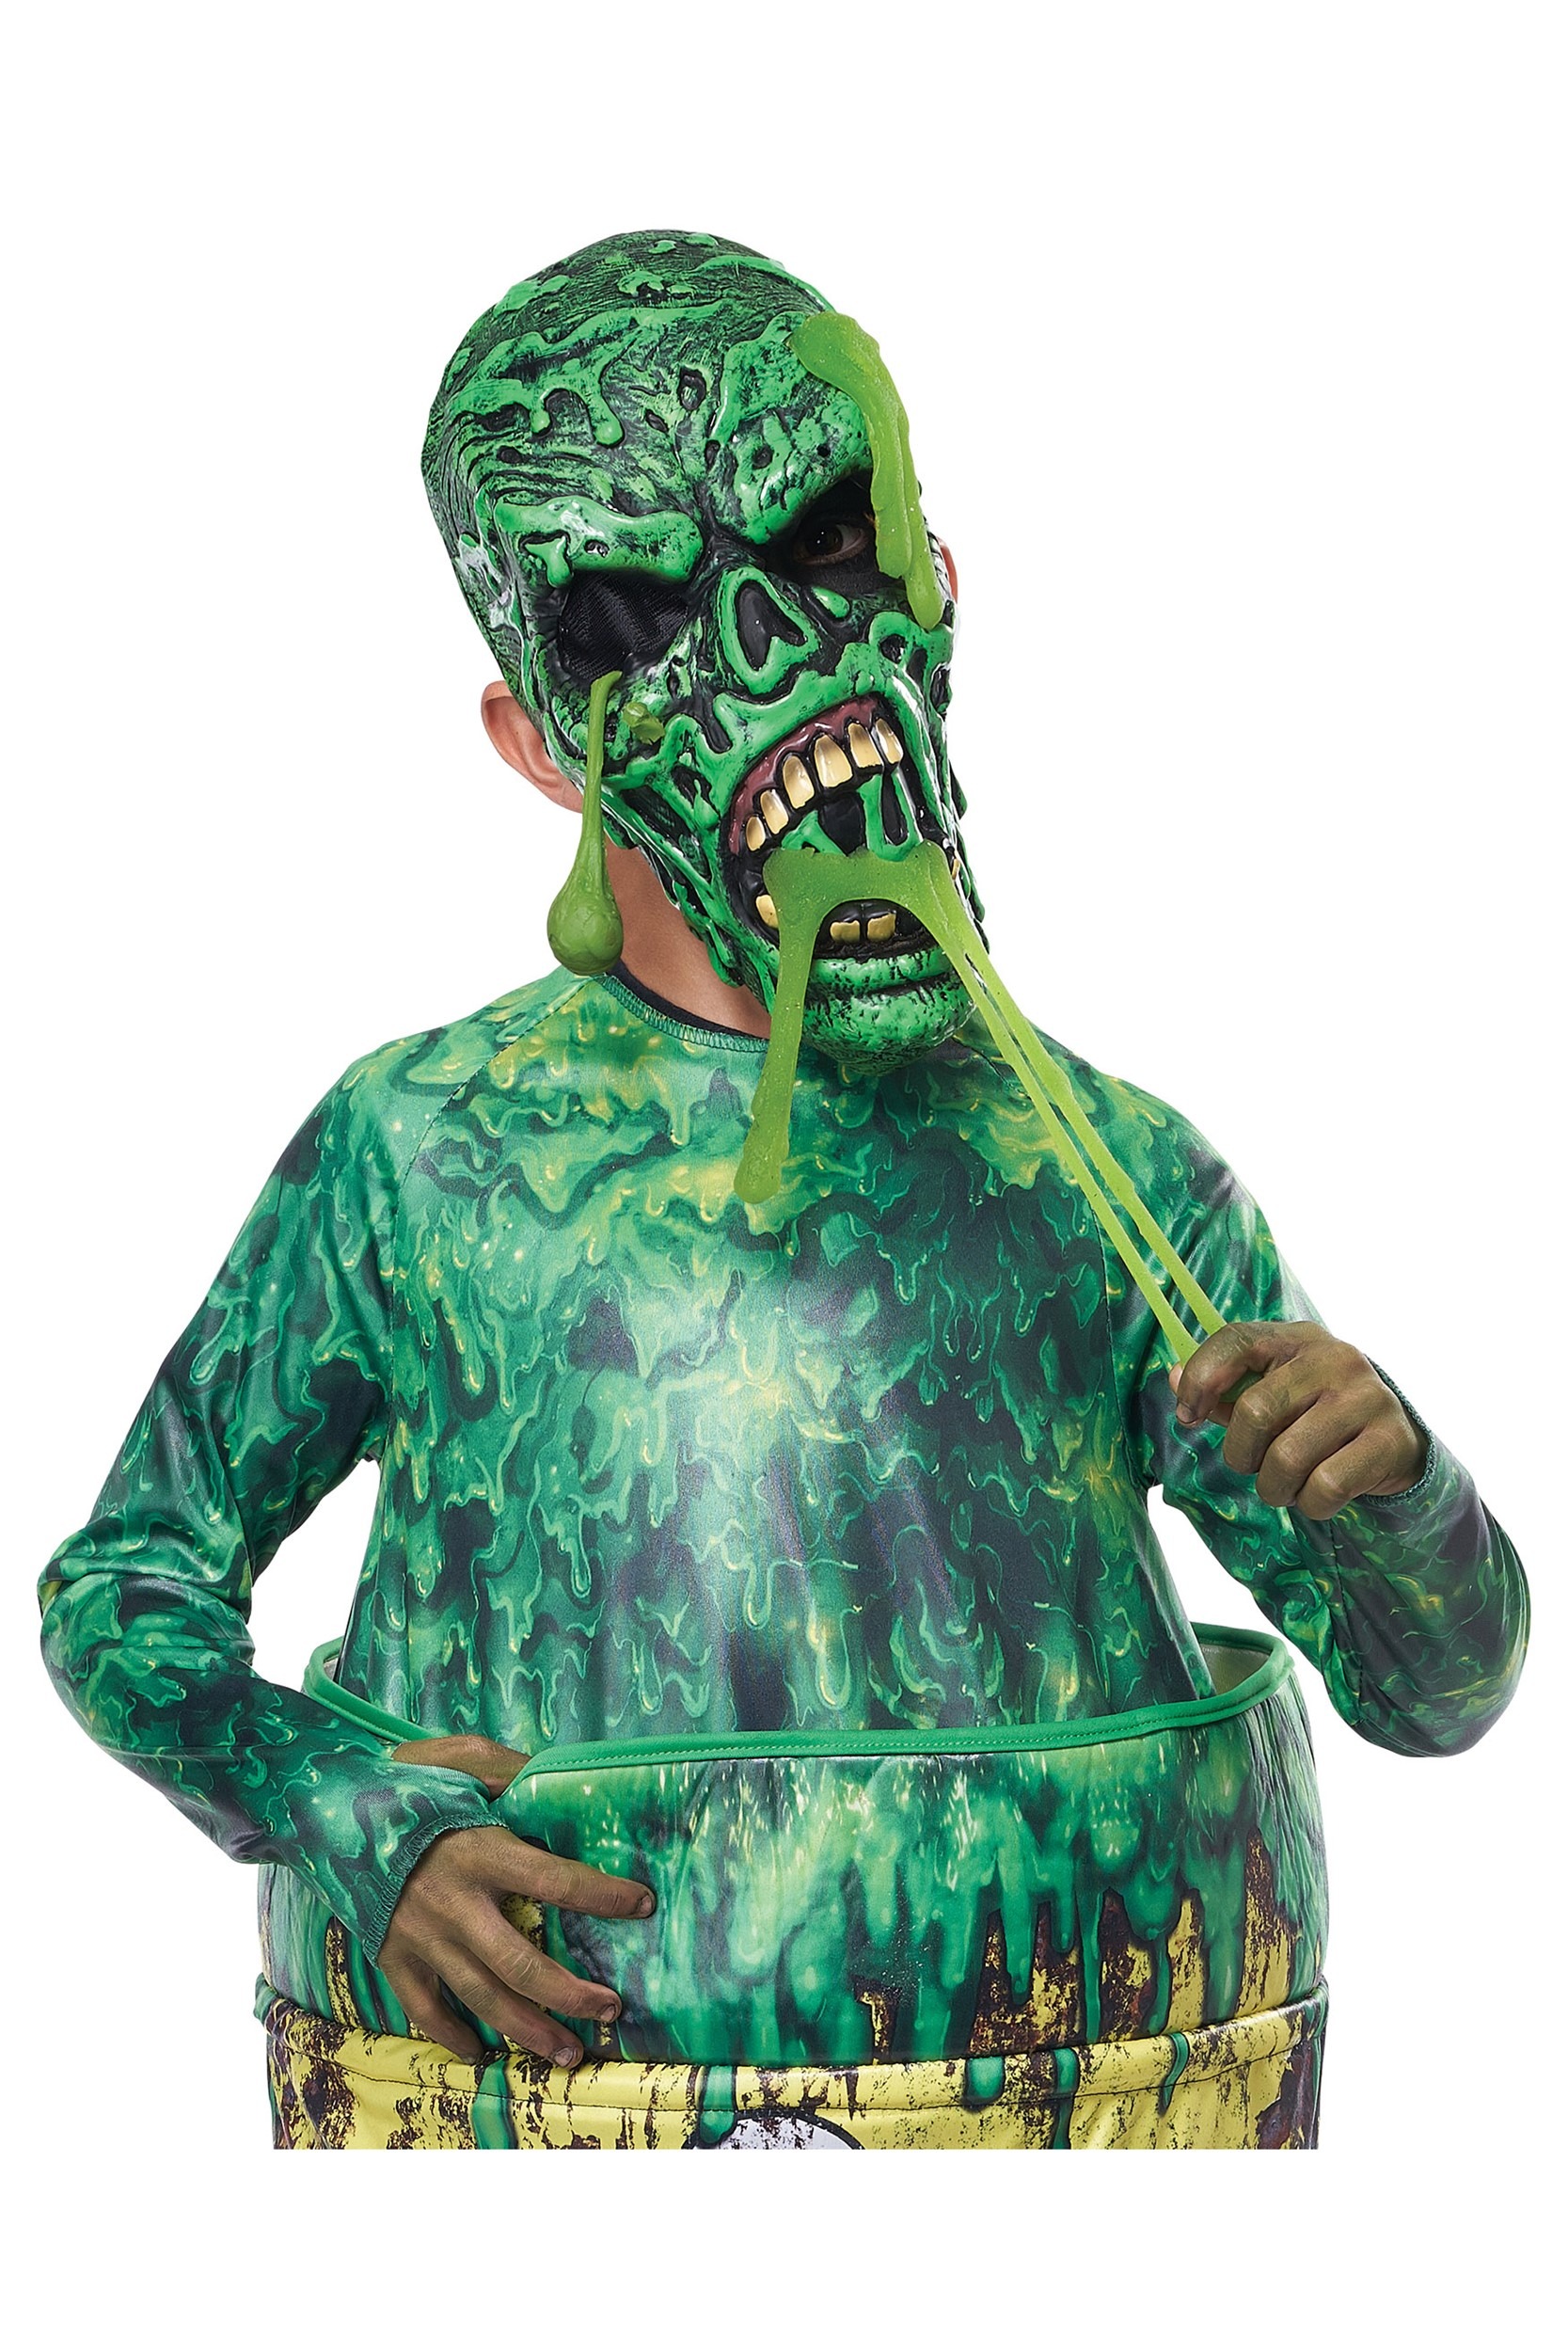 Hazardous Waste Costume Kid's